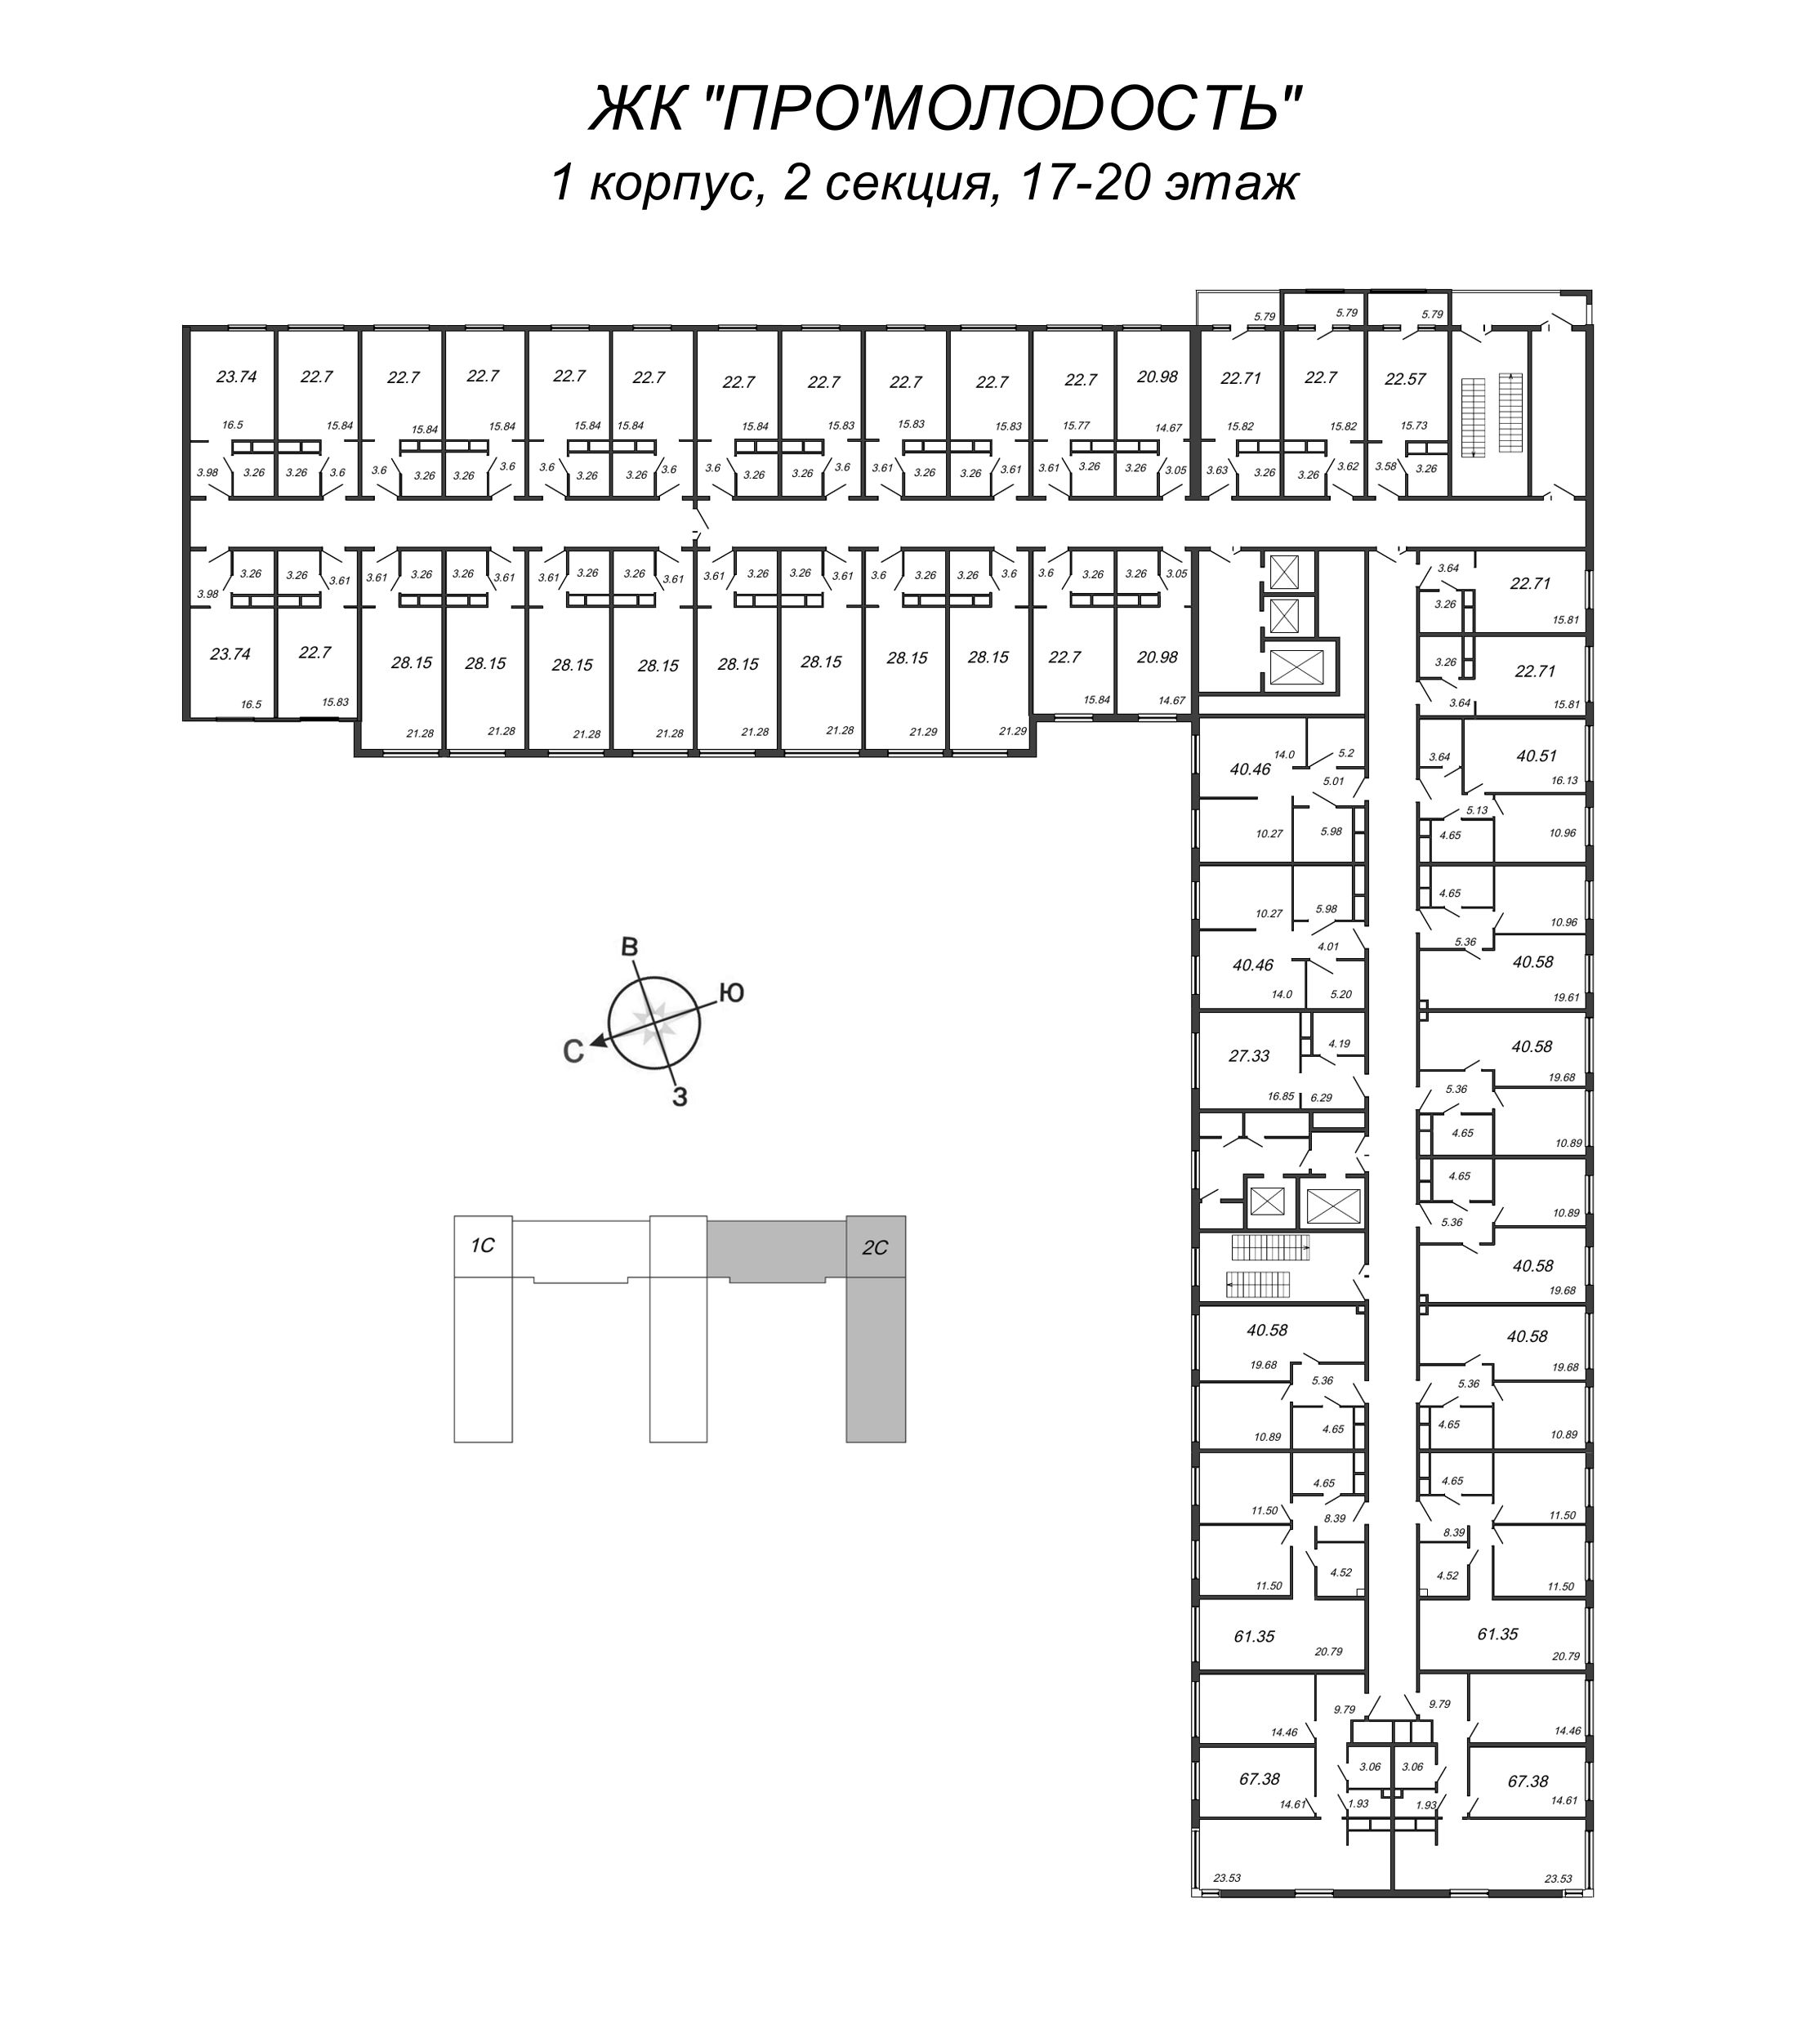 3-комнатная (Евро) квартира, 61.35 м² - планировка этажа